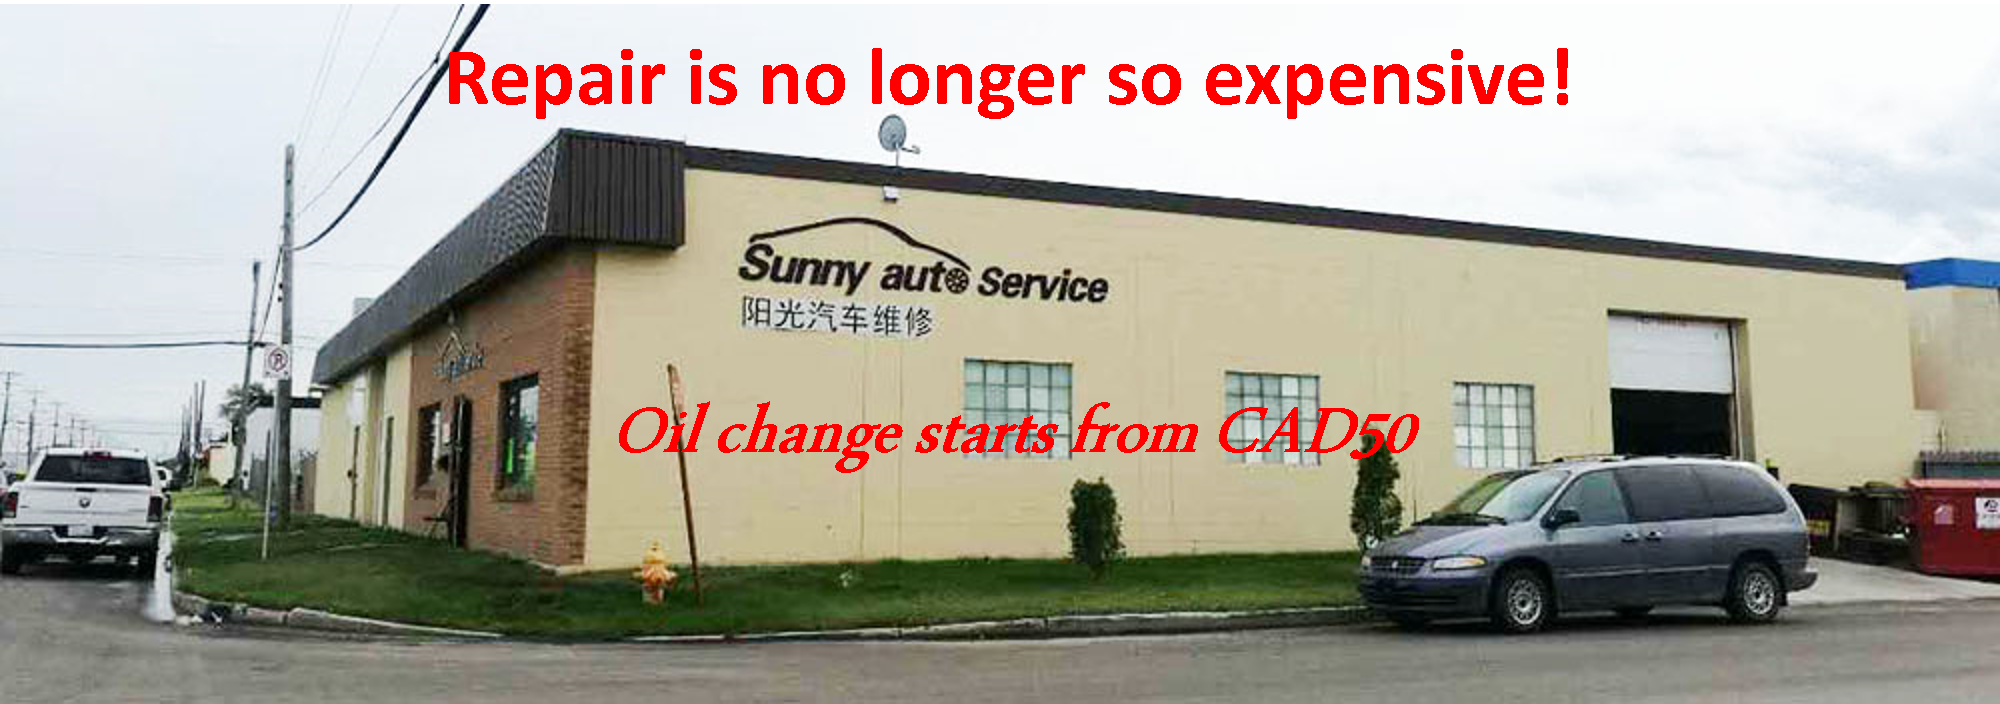 Saskatoon Auto Service,Saskatoon Auto Repair,Saskatoon Oil Change,Saskatoon Tire Change,Saskatoon Car Repair,Saskatoon Car Service